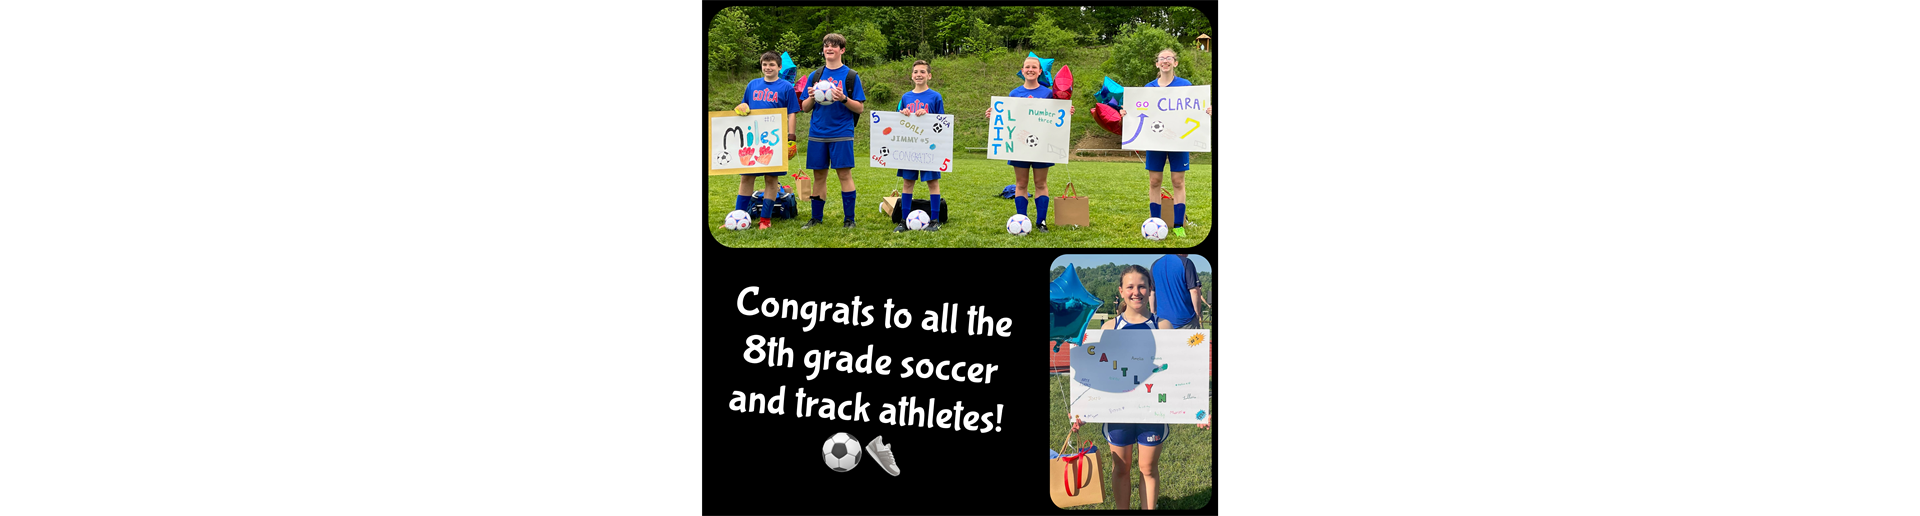 Congrats 8th grade Soccer & Track athletes!